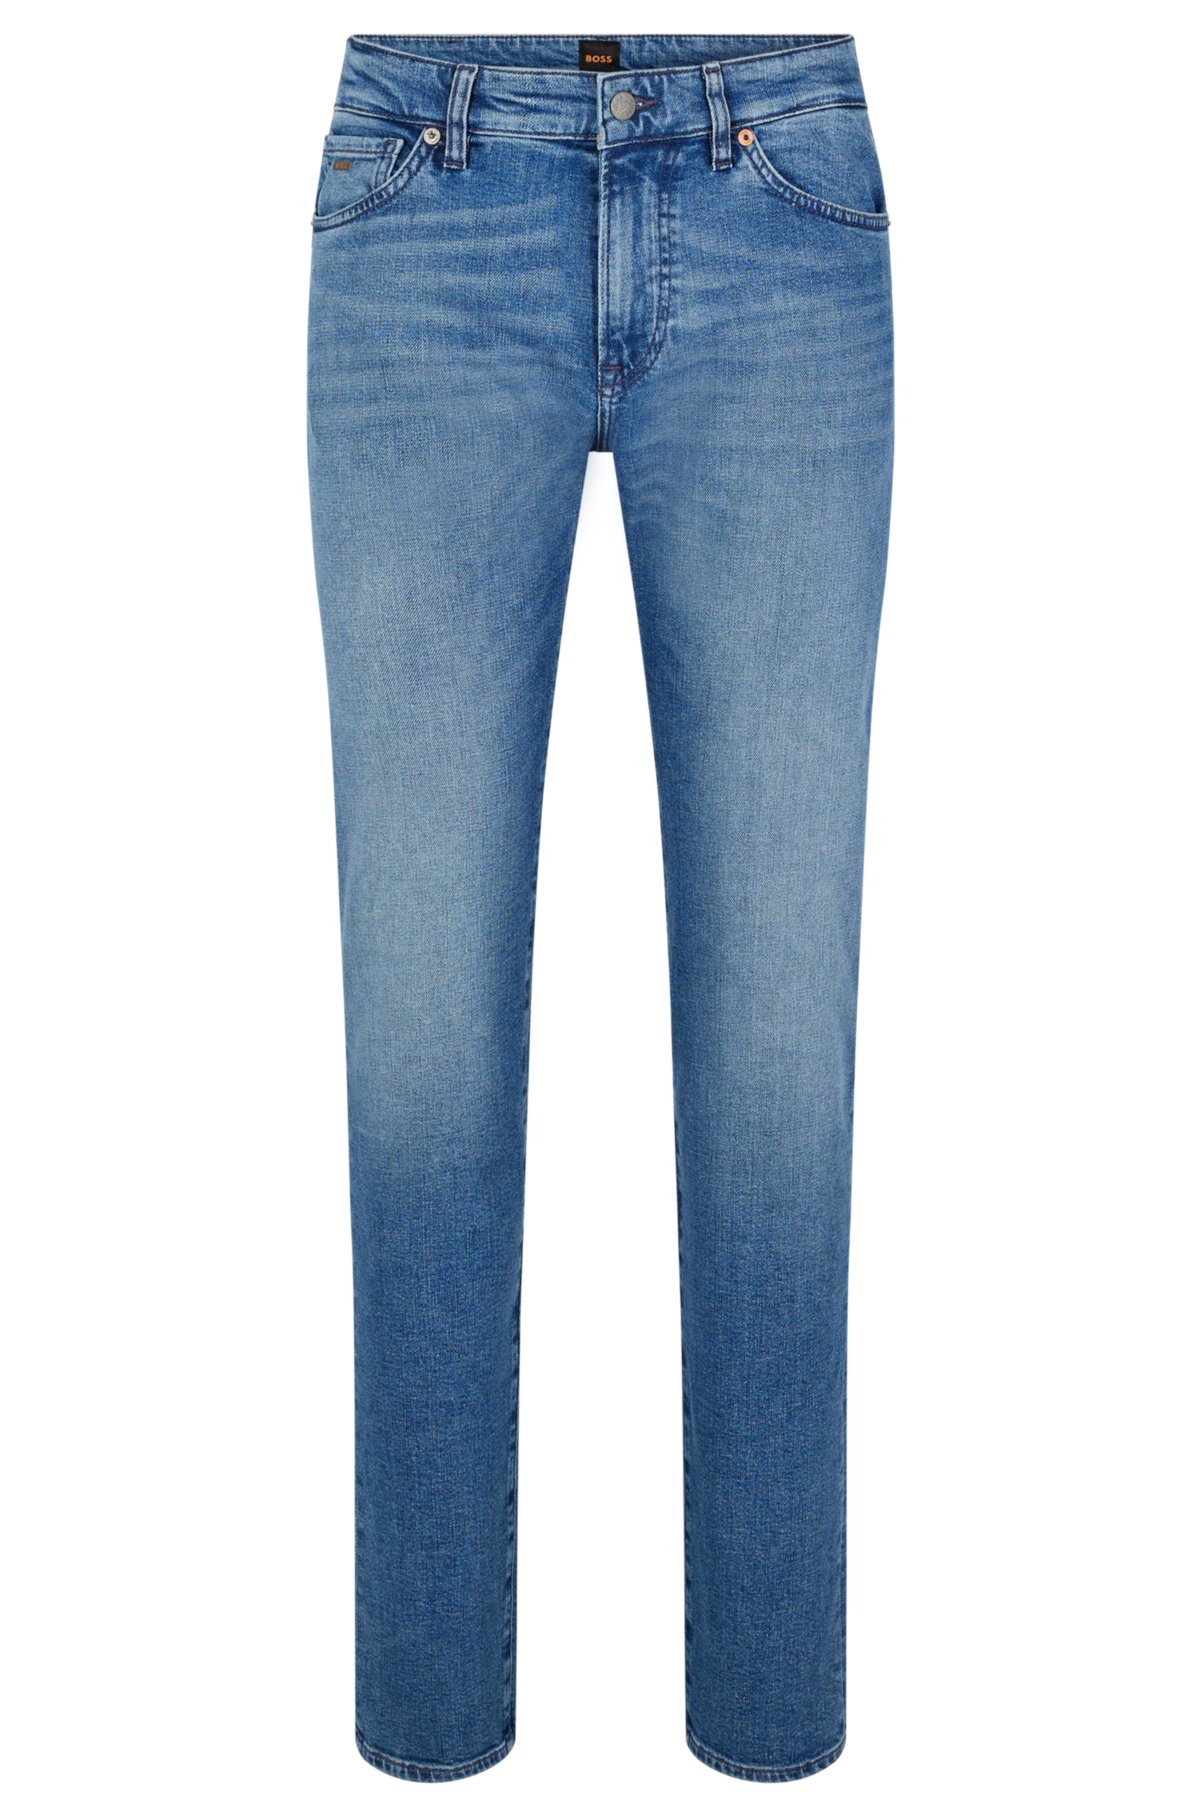 BOSS - Jeans Regular-Fit Blaue aus bequemem Stretch-Denim